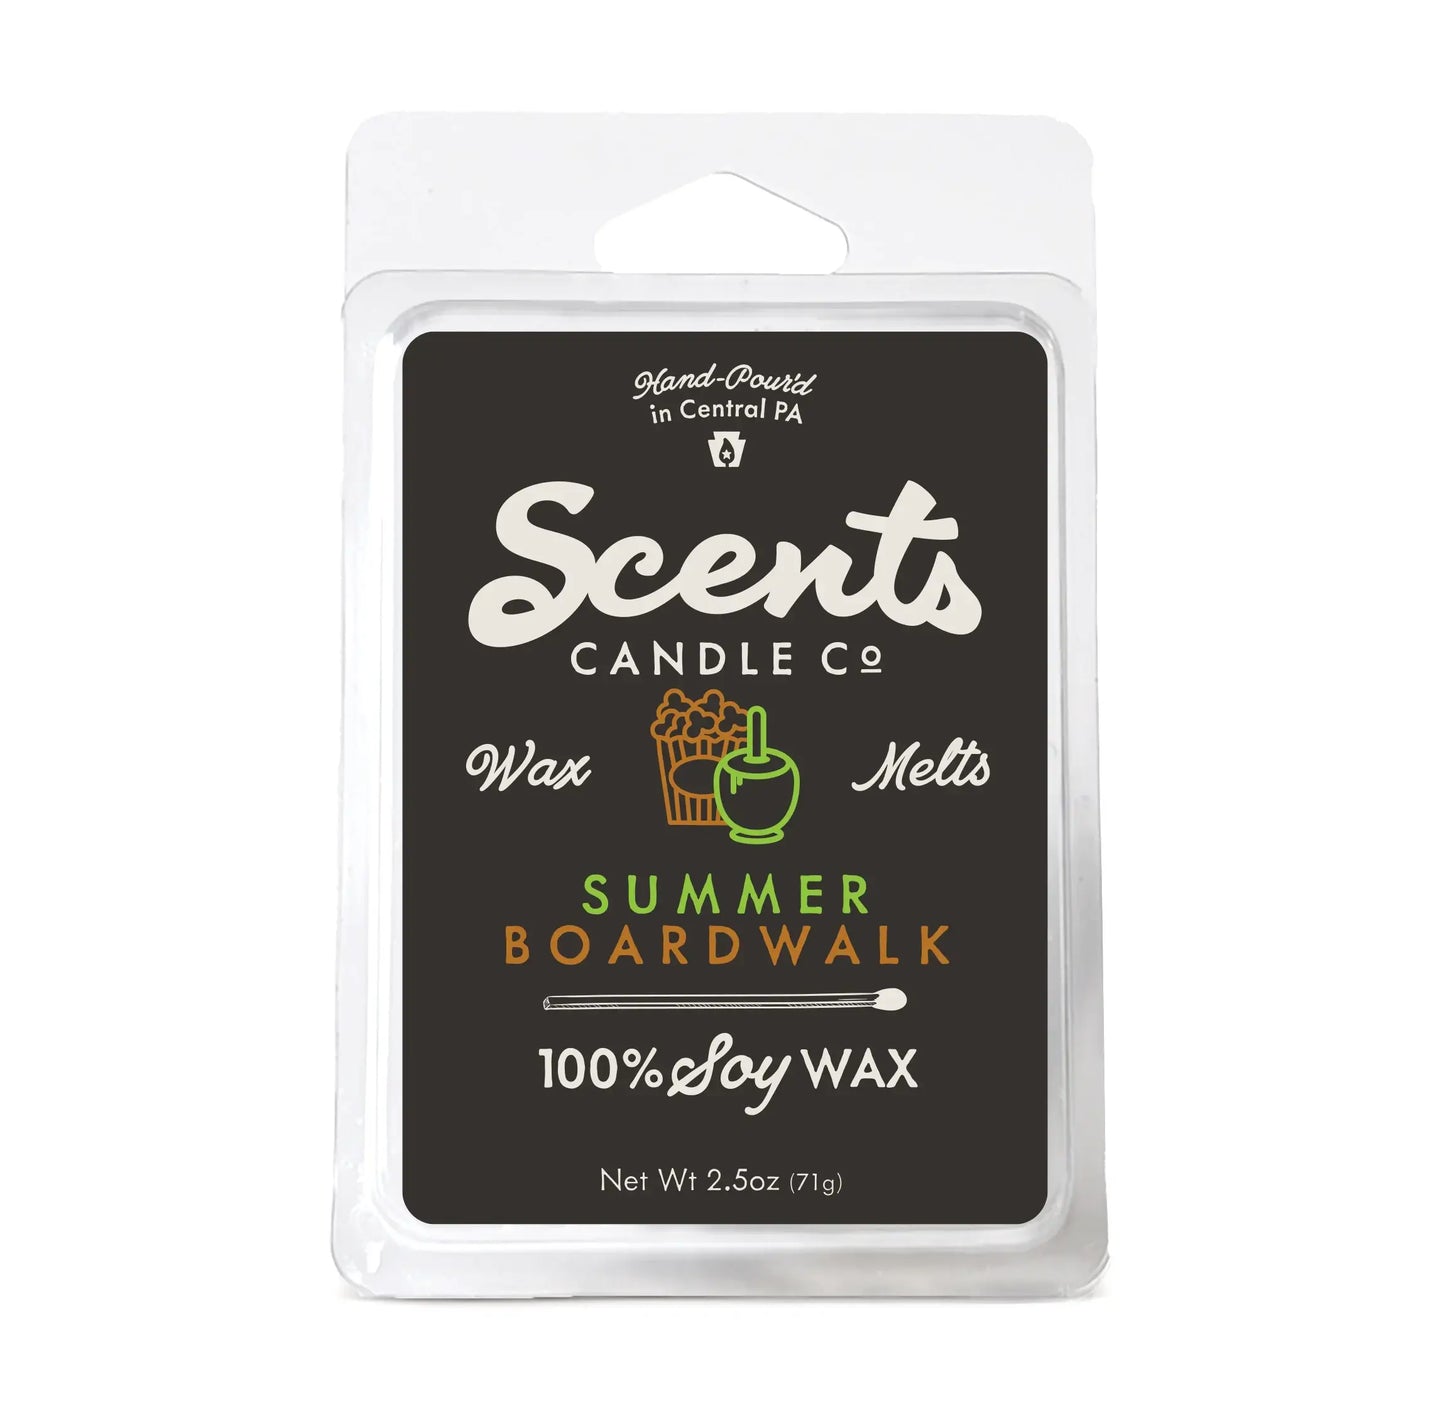 Scents Candle Co. Summer Boardwalk Wax Melt